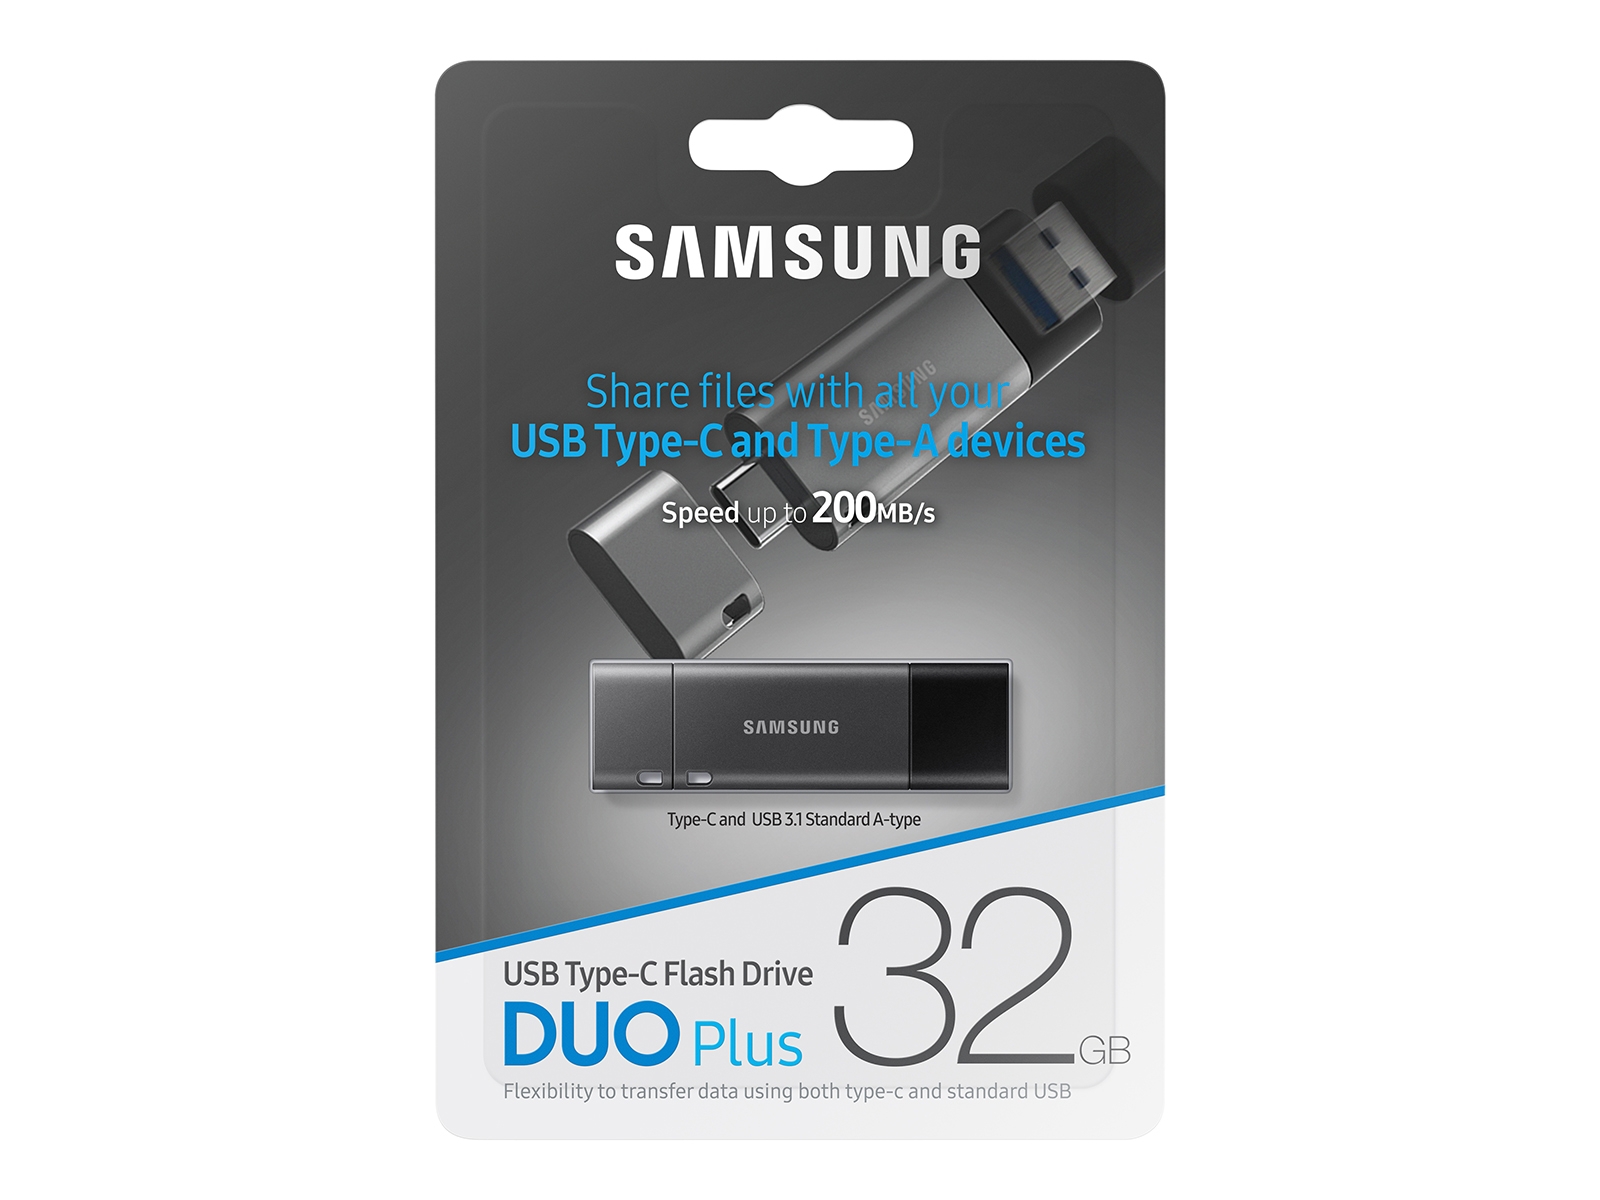 USB Flash Drive Plus 32GB Memory & Storage - MUF-32DB/AM | Samsung